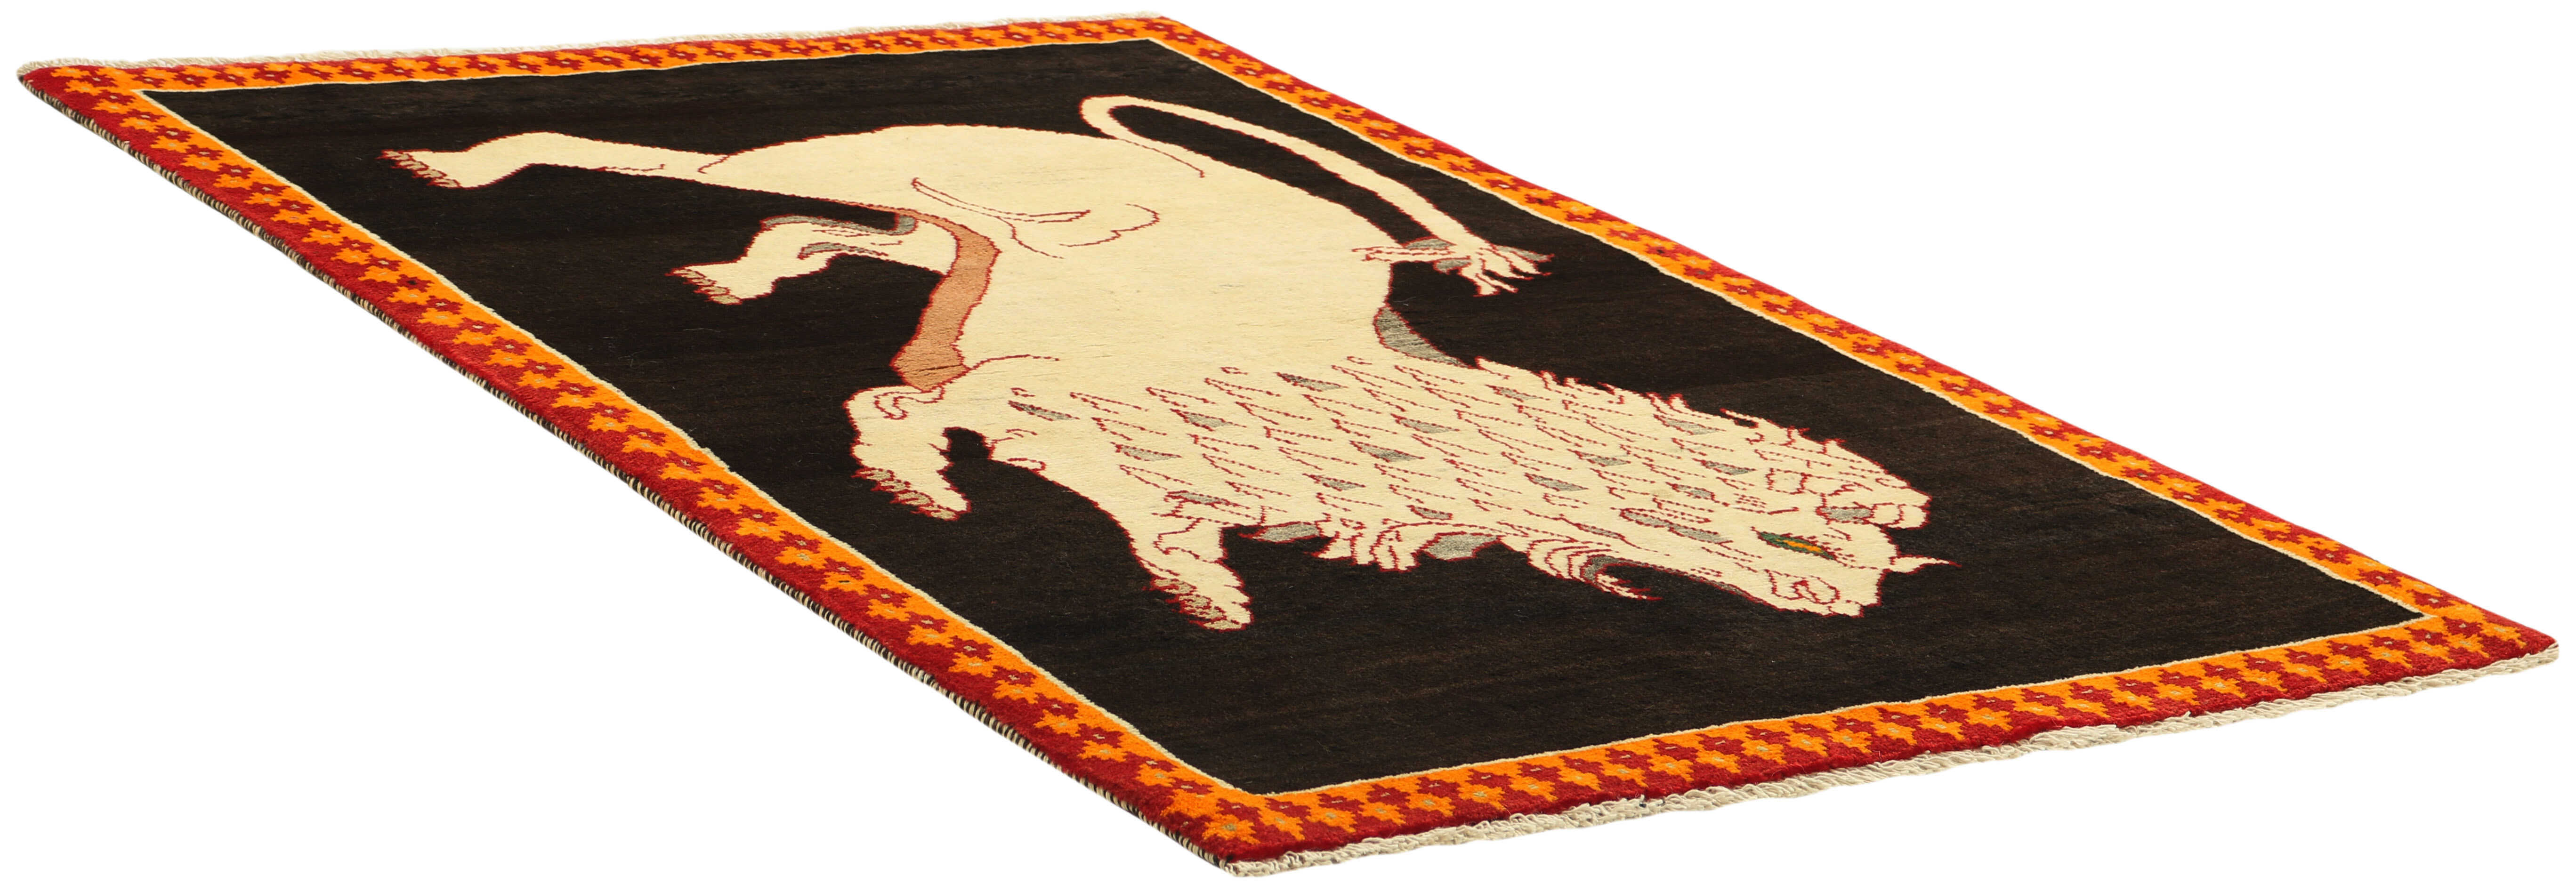 black persian rug with figural design